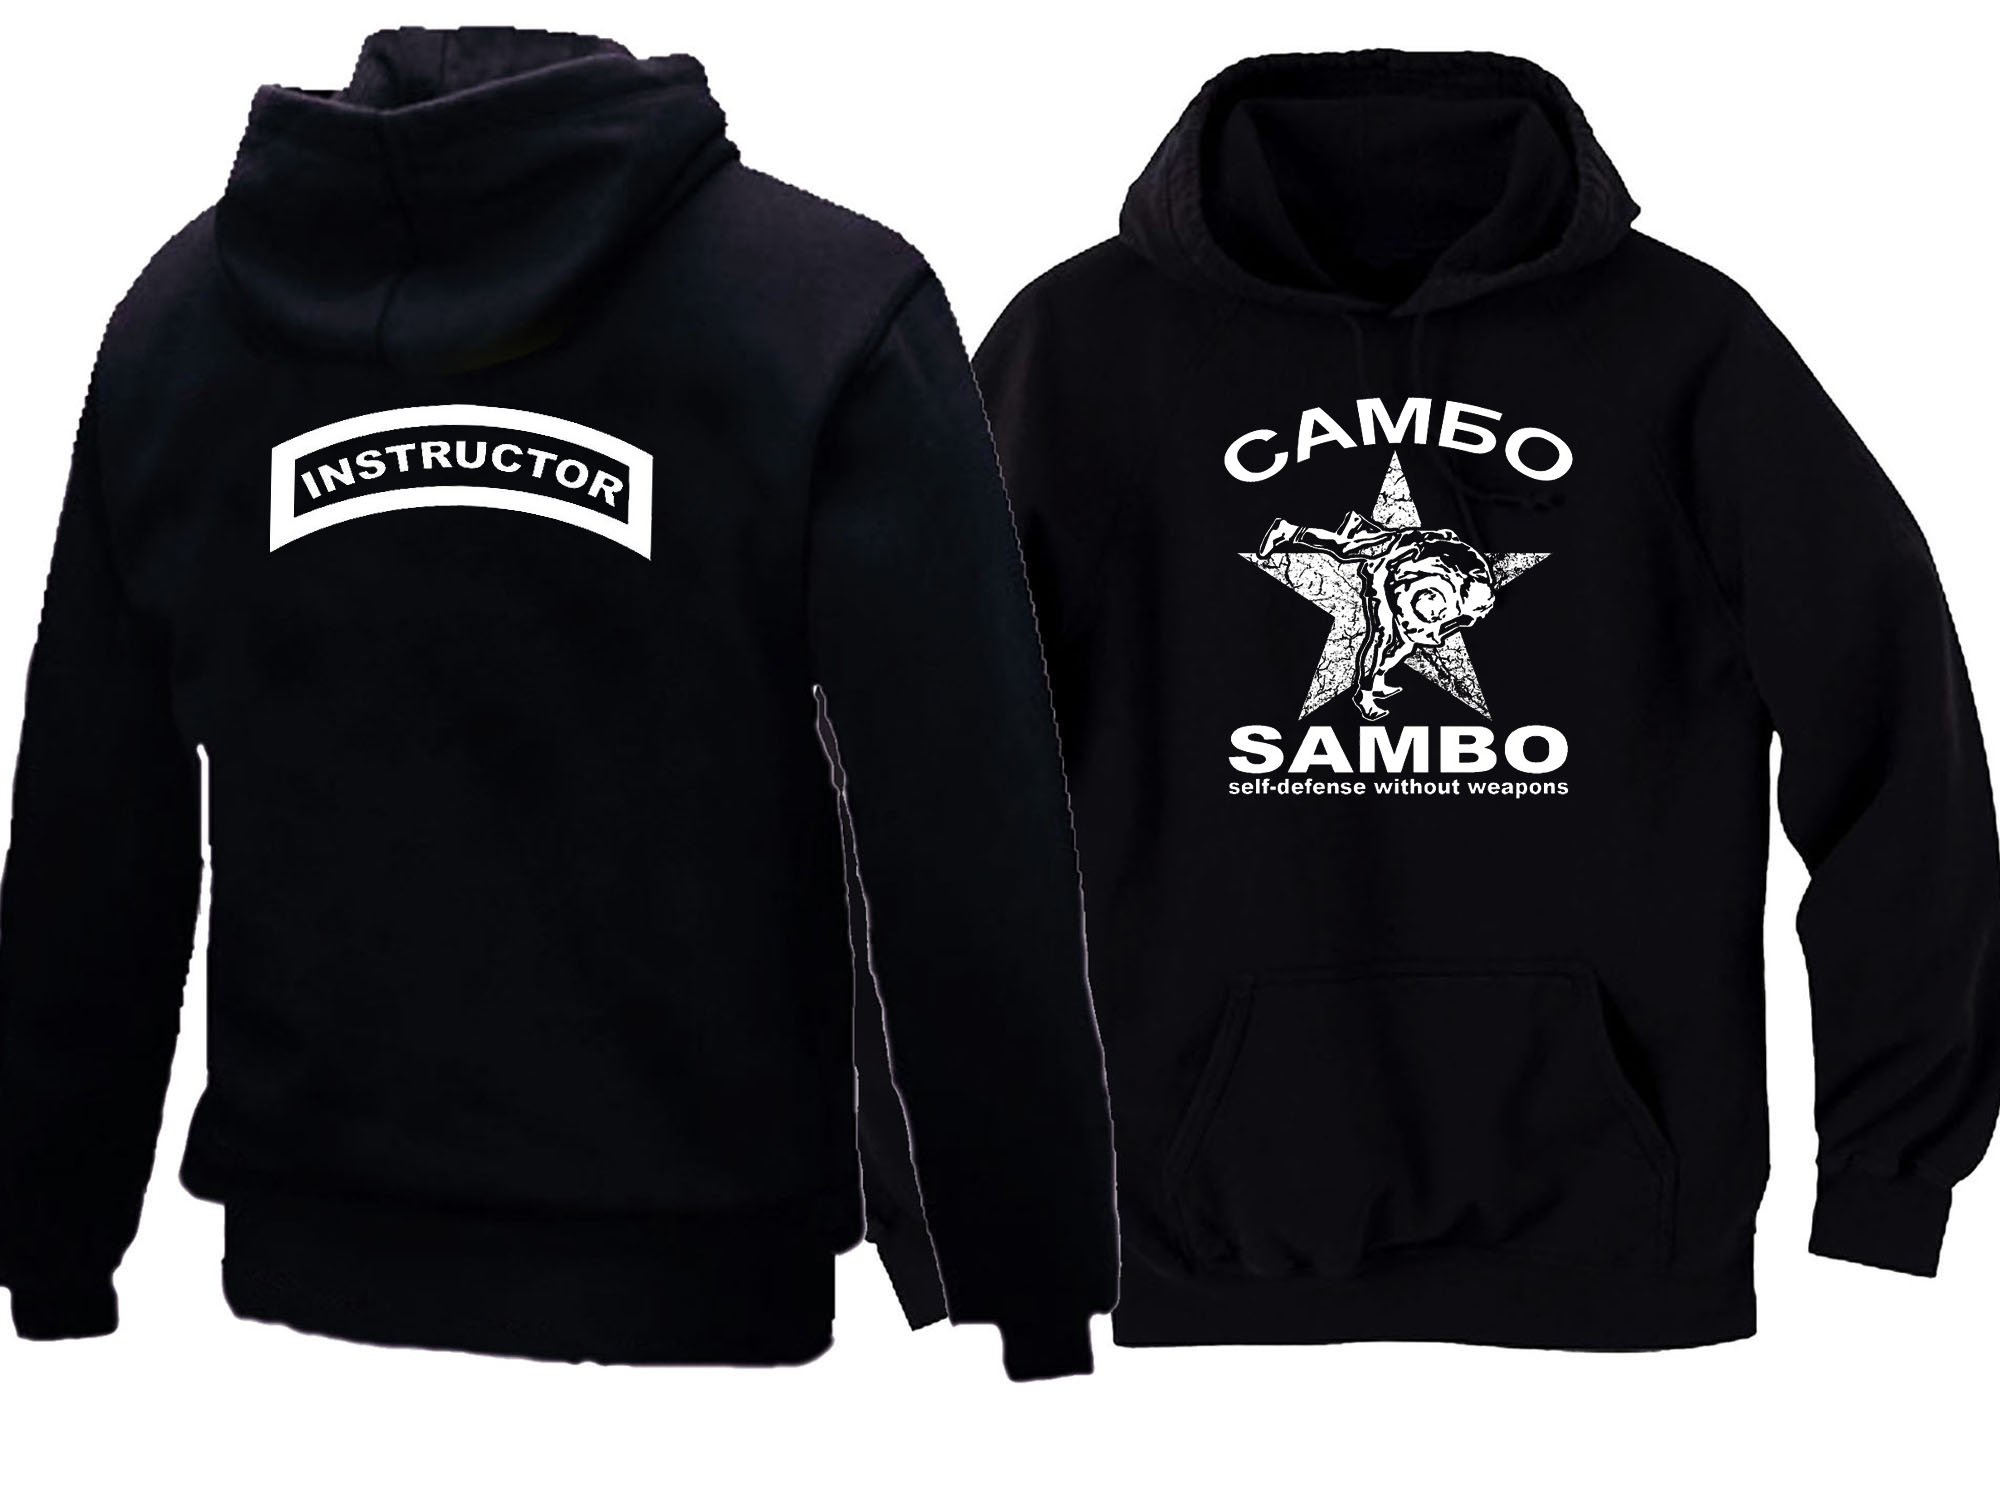 Sambo Instructor Russian martial arts cambo hoodie 2